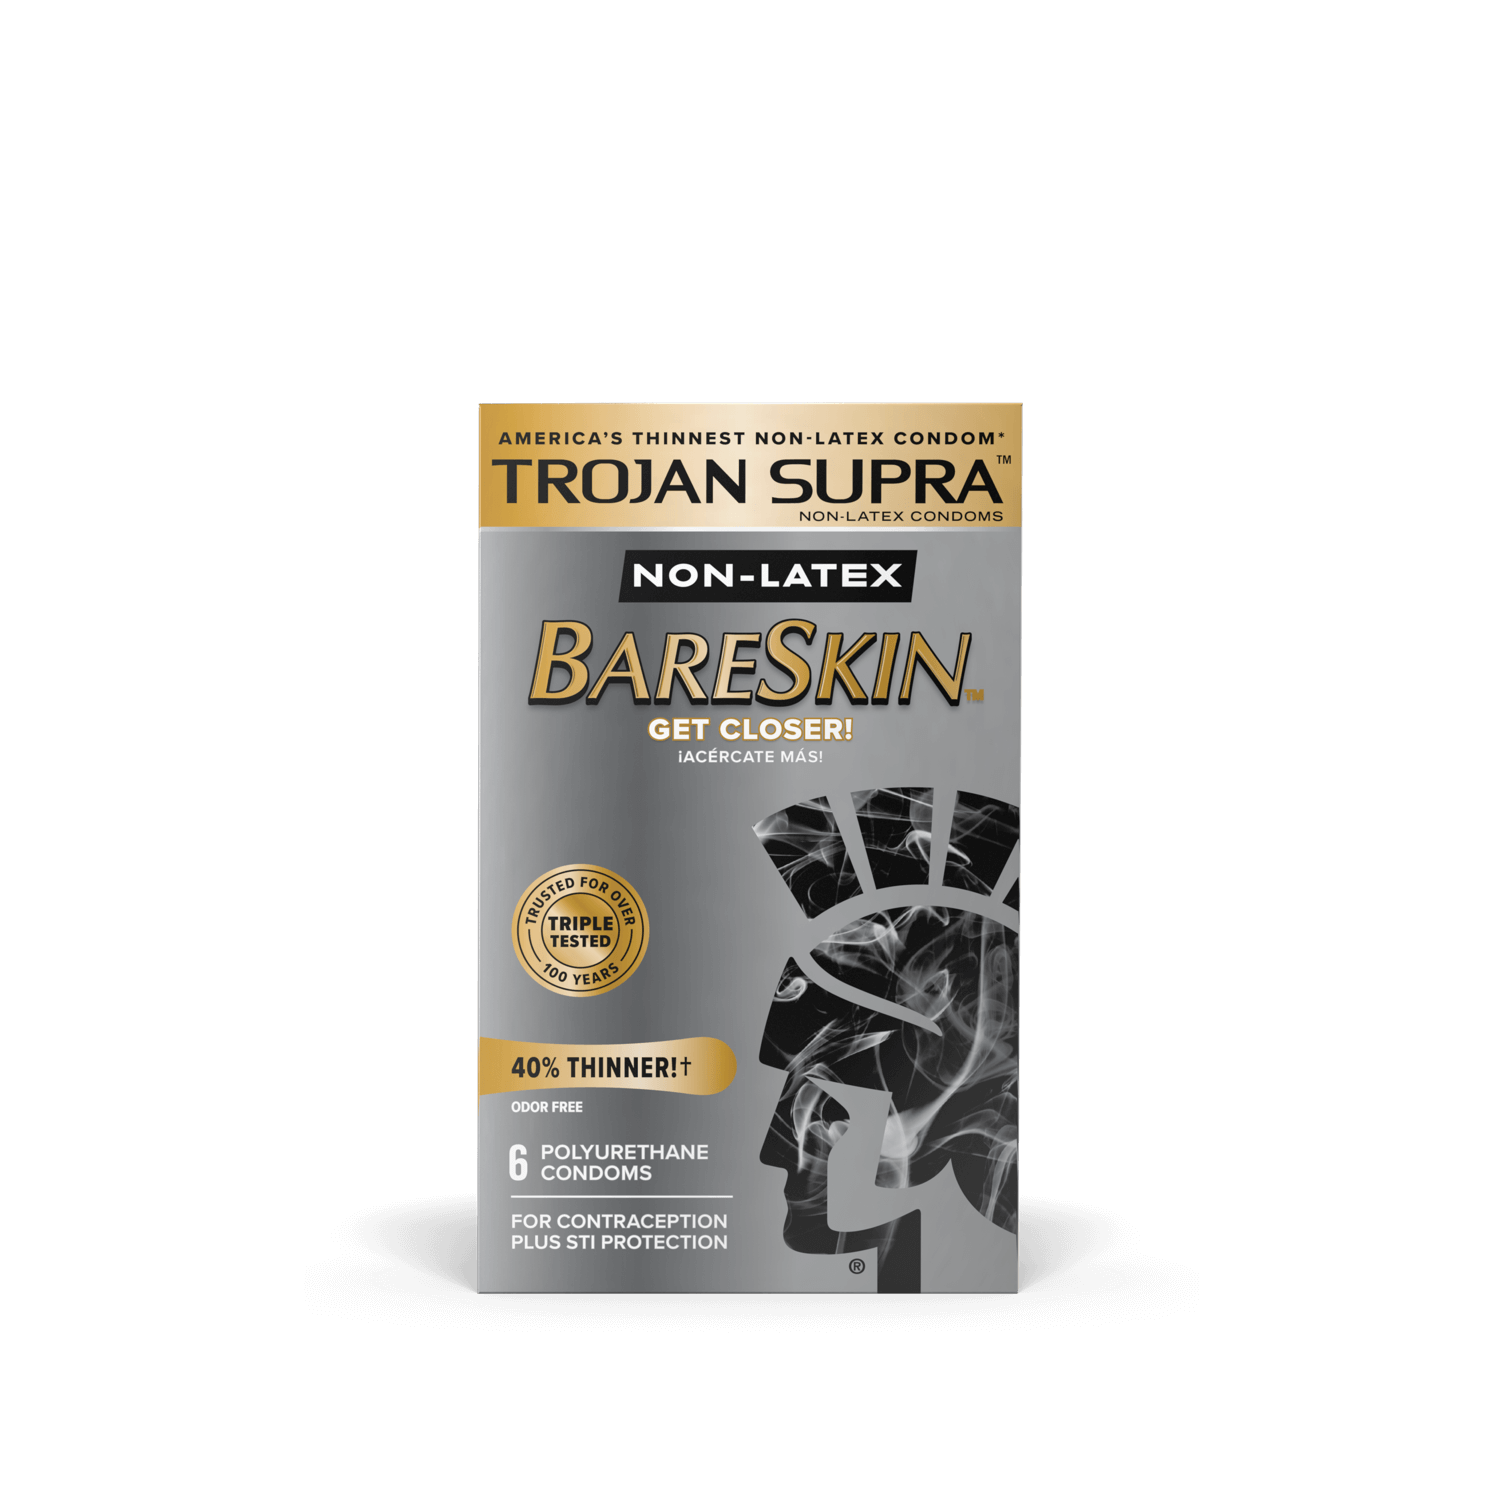 Trojan Supra Bareskin Non-Latex Condoms.